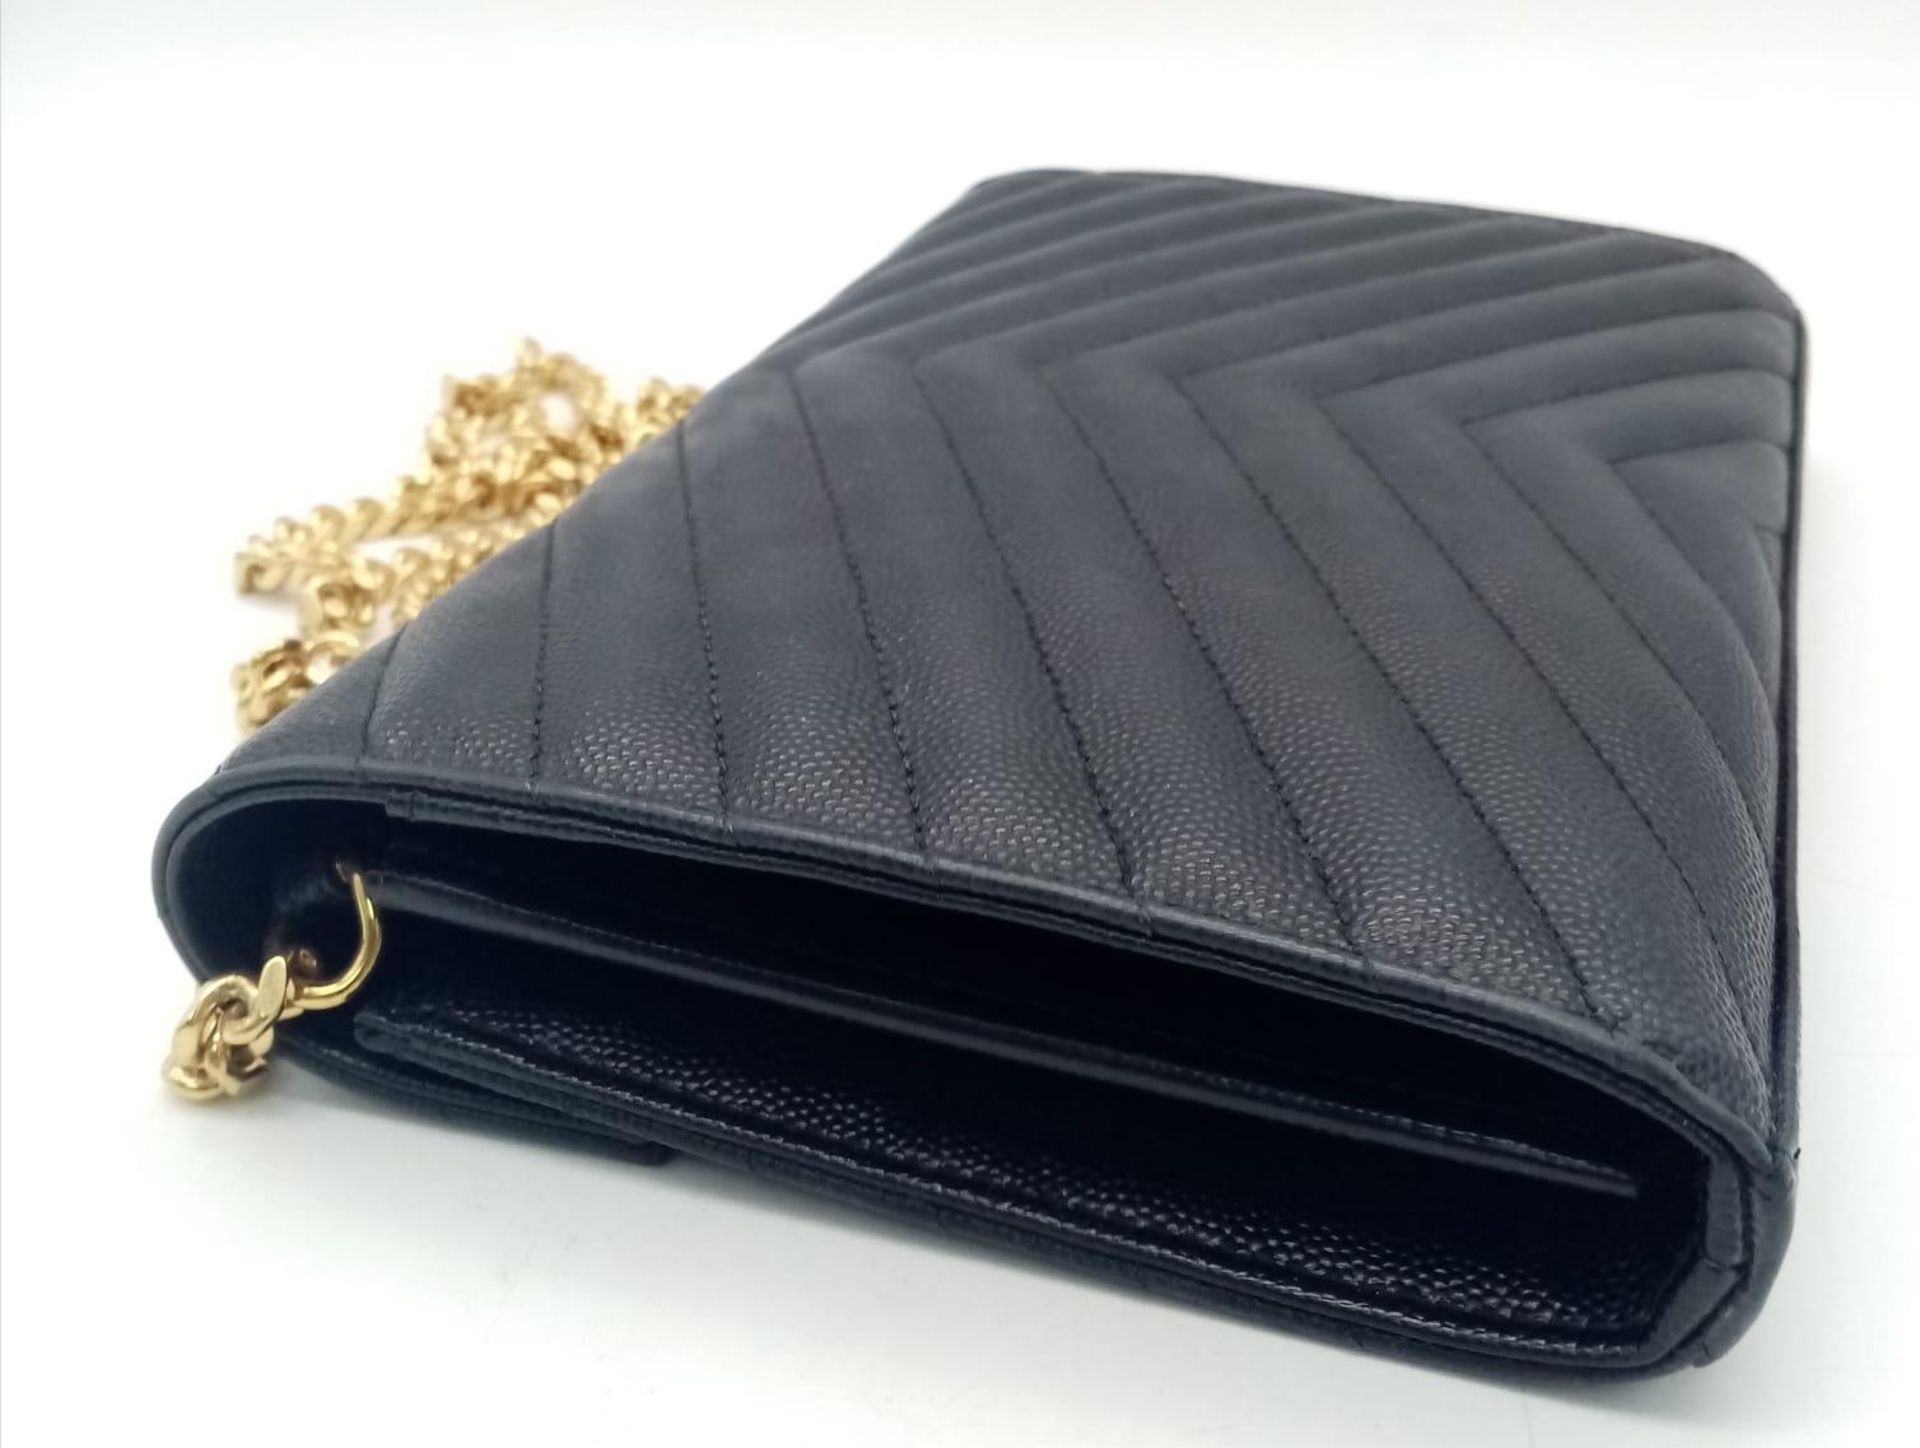 A classic Saint Laurent Cassandre Matelasse leather bag, gold tone hardware including a chain - Image 2 of 5